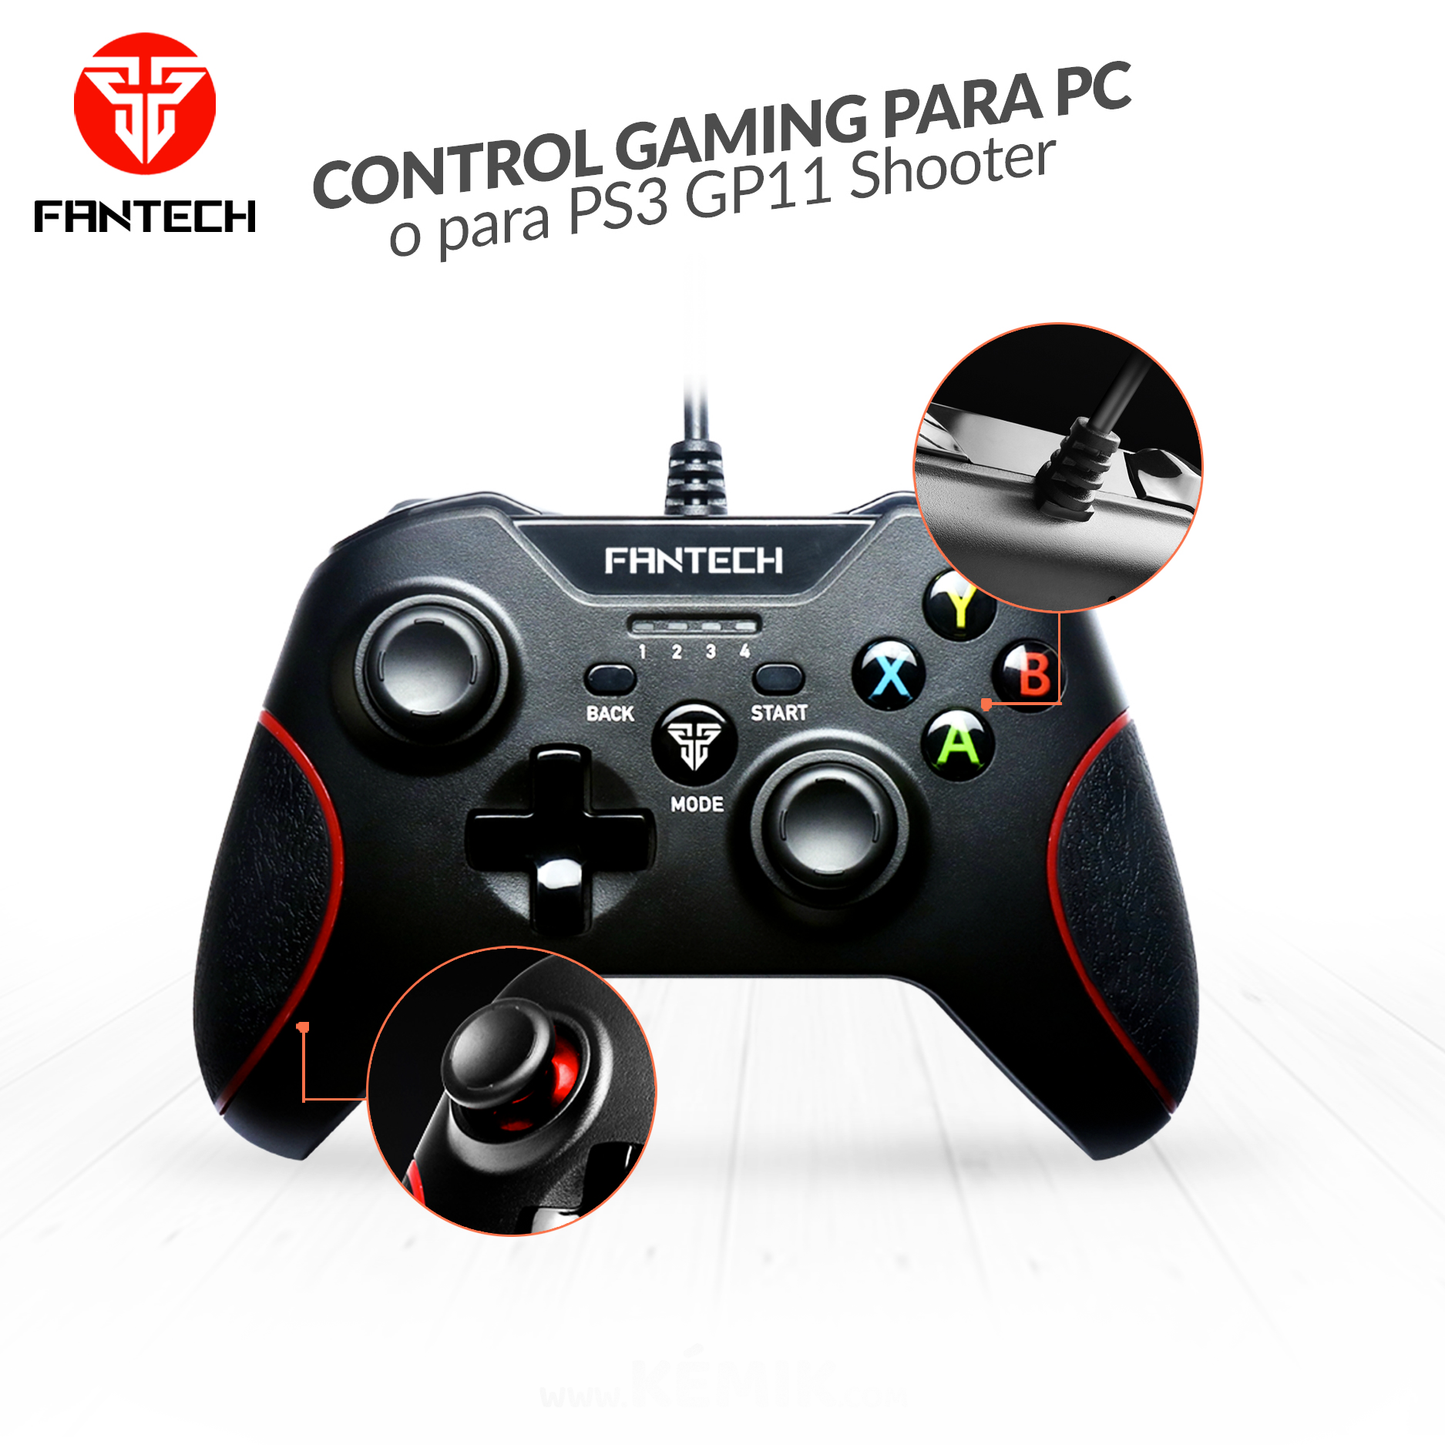 Control Fantech GP11 Shooter PS3 / PC